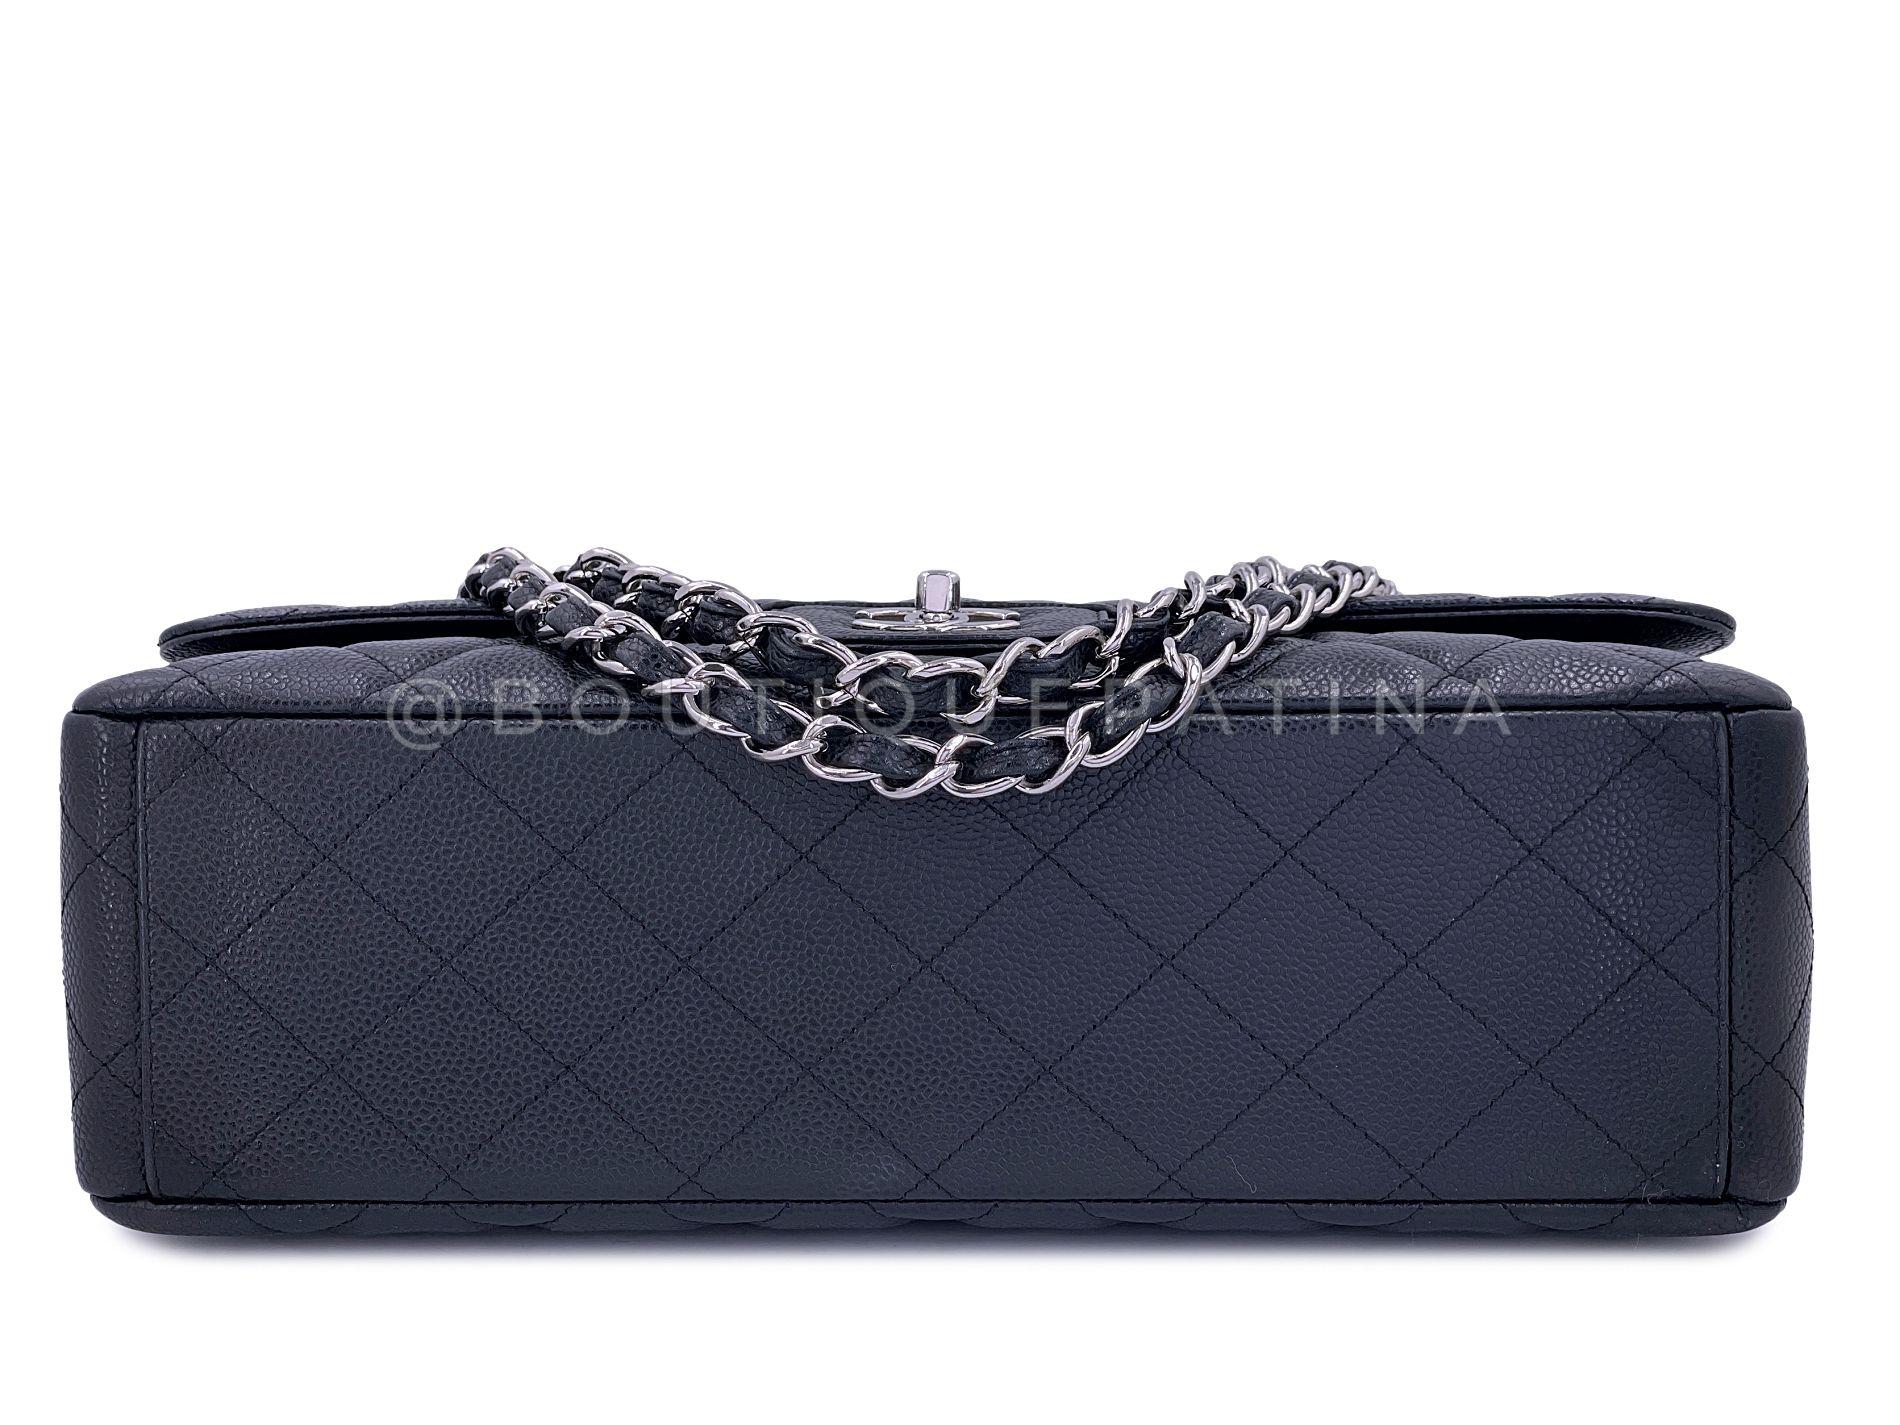 Chanel Black Caviar Maxi Flap Bag SHW Single 66714 For Sale 2